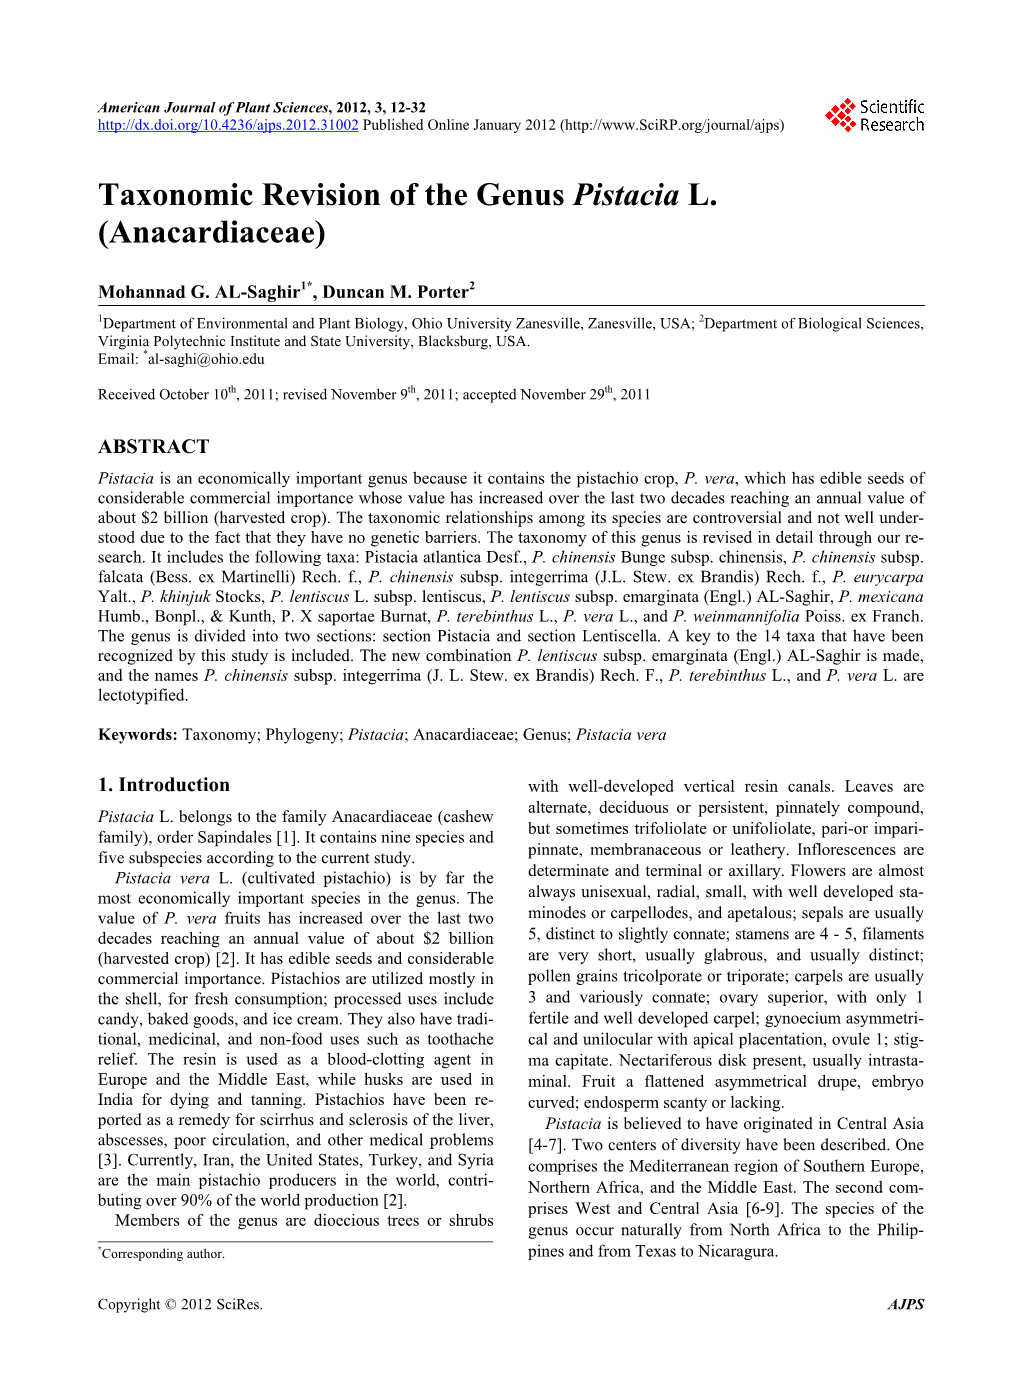 Taxonomic Revision of the Genus Pistacia L. (Anacardiaceae)